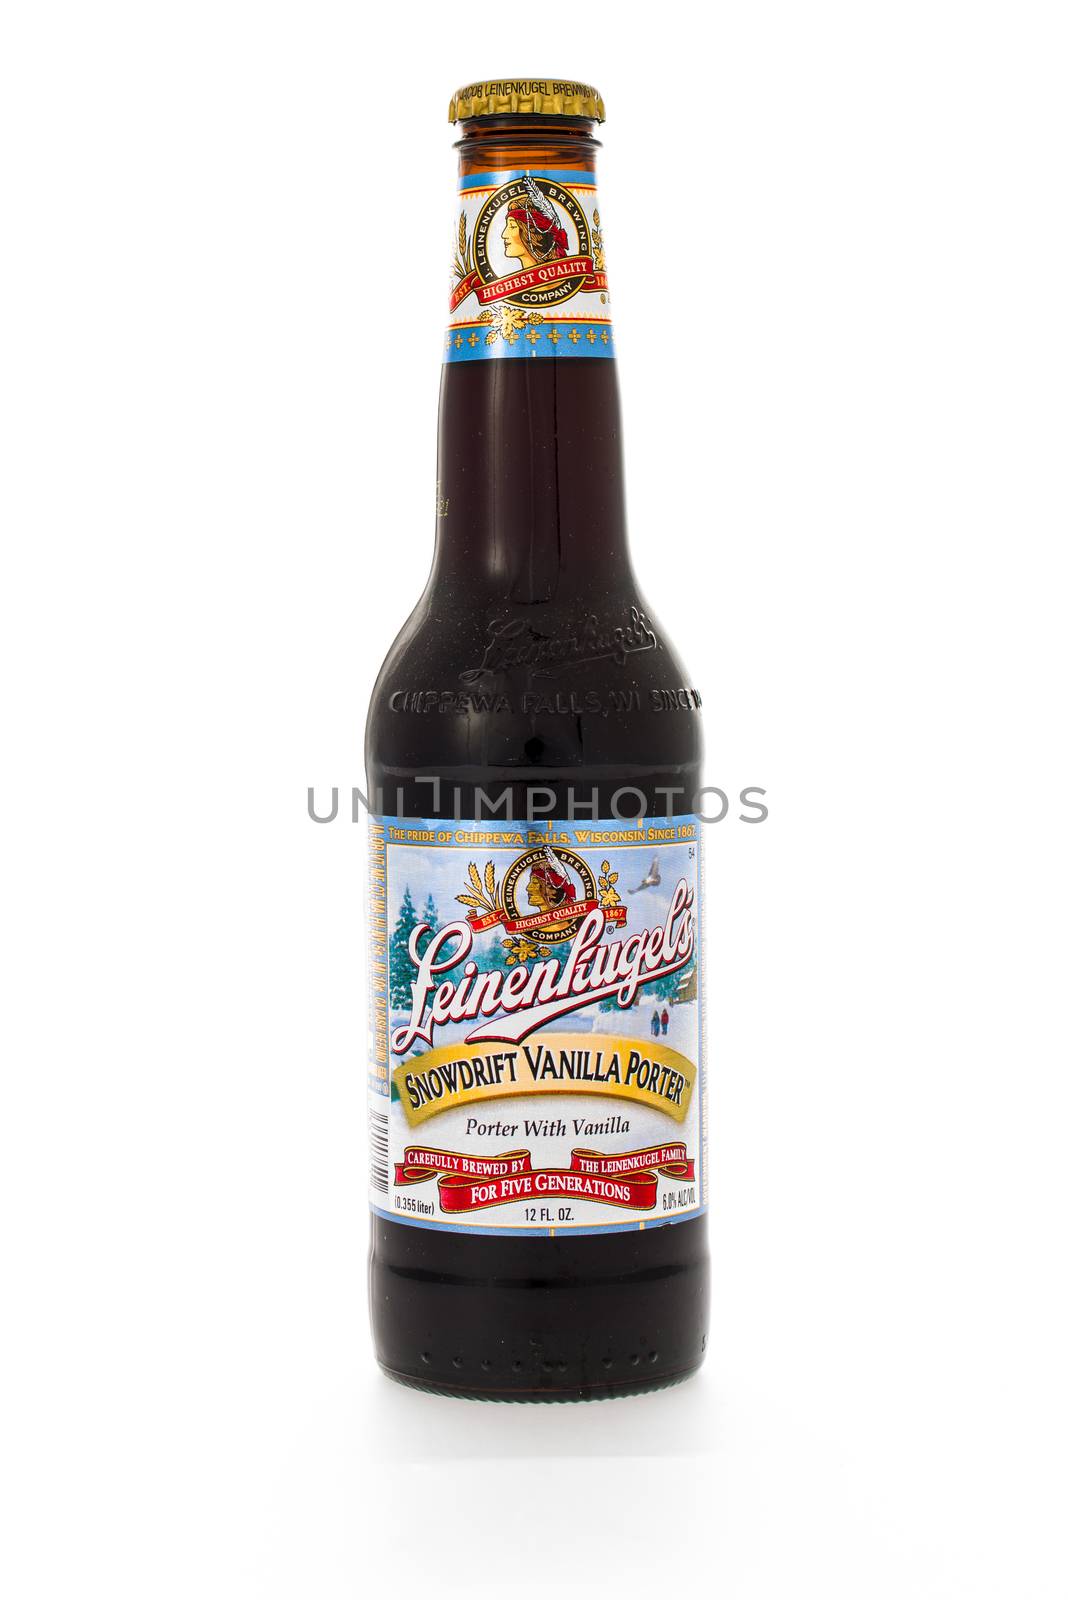 Winneconne, WI - 6 February 2015:  Bottle of Leinenkugel's Snowdrift Vanilla Porter beer brewed in Wisconsin.